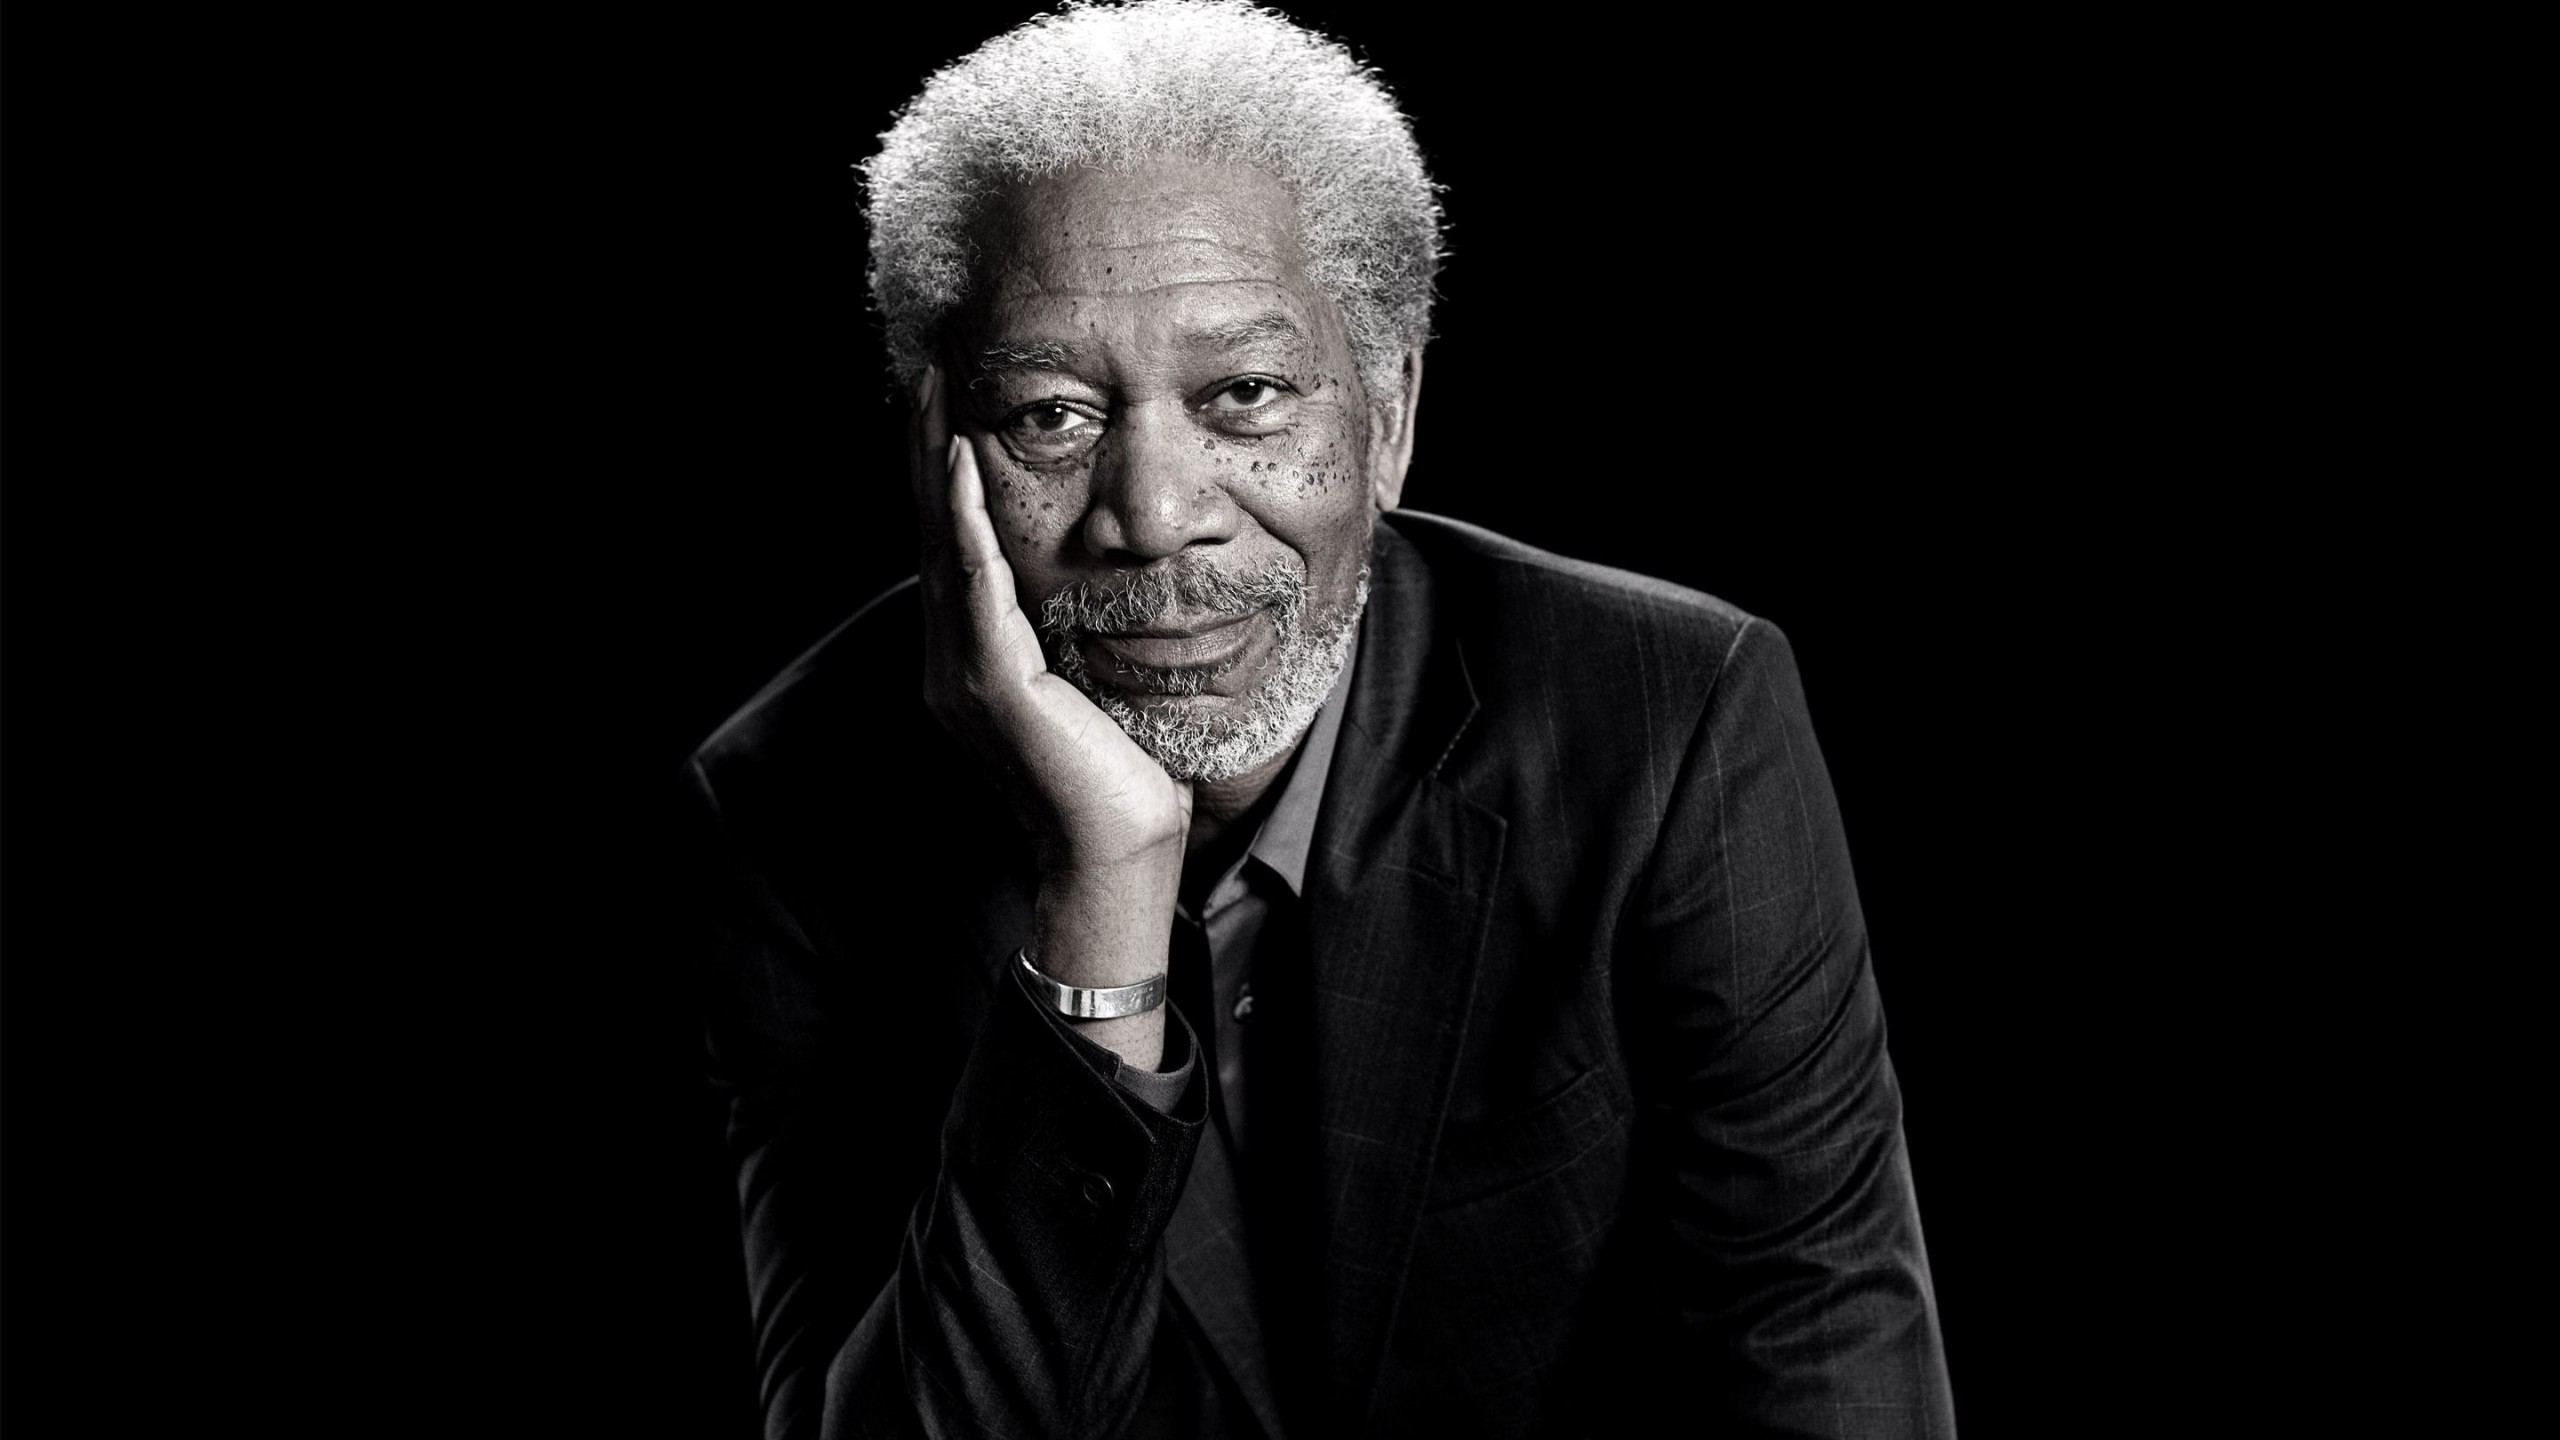 Morgan Freeman Portrait Wallpaper for Social Media YouTube Channel Art